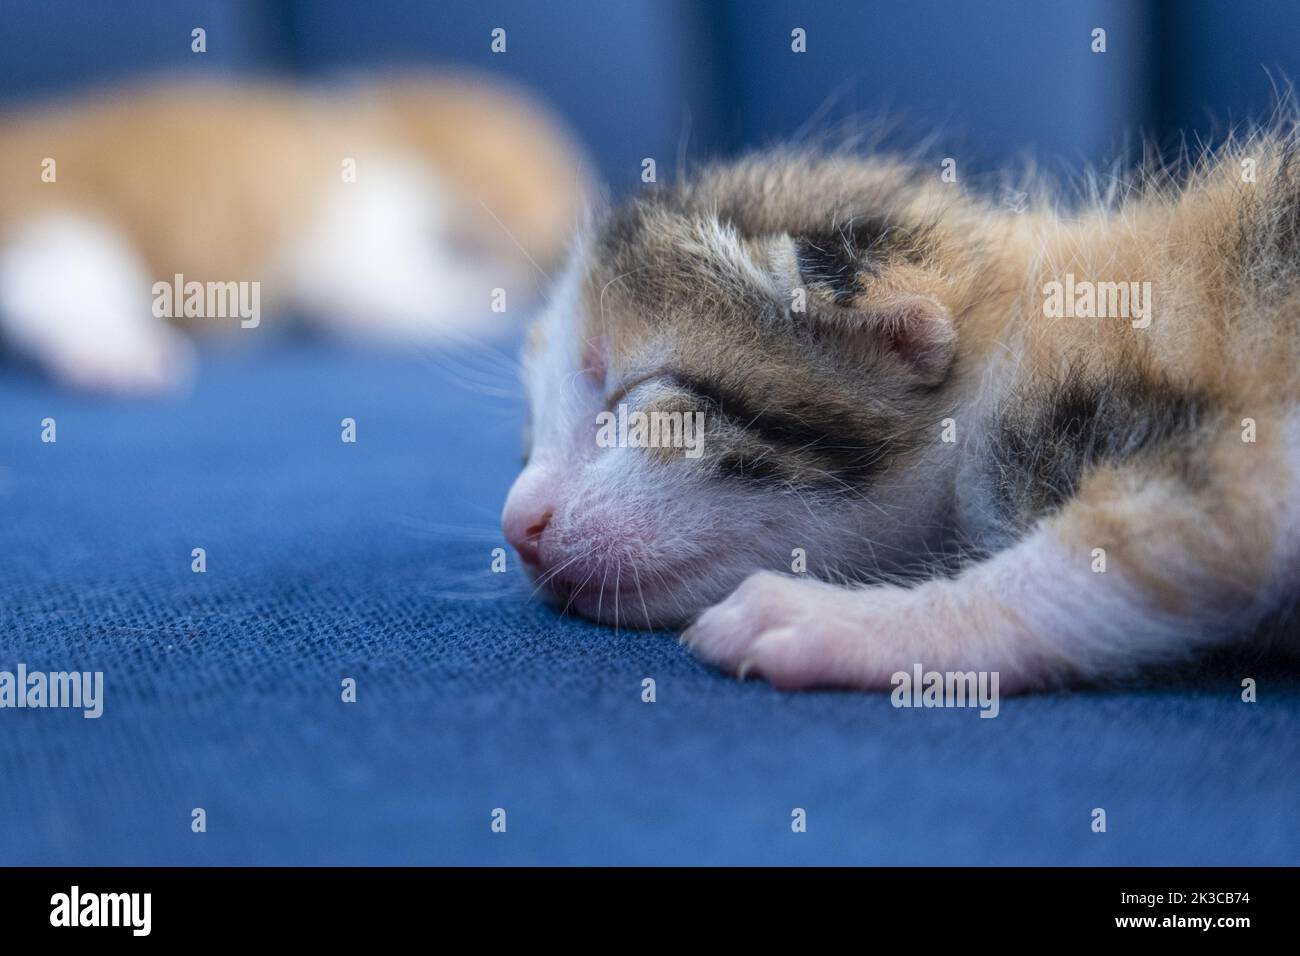 Selective focus sleeping newborn cat, cute small kitten concept, calico tabby cats, adorable pet idea, Stock Photo